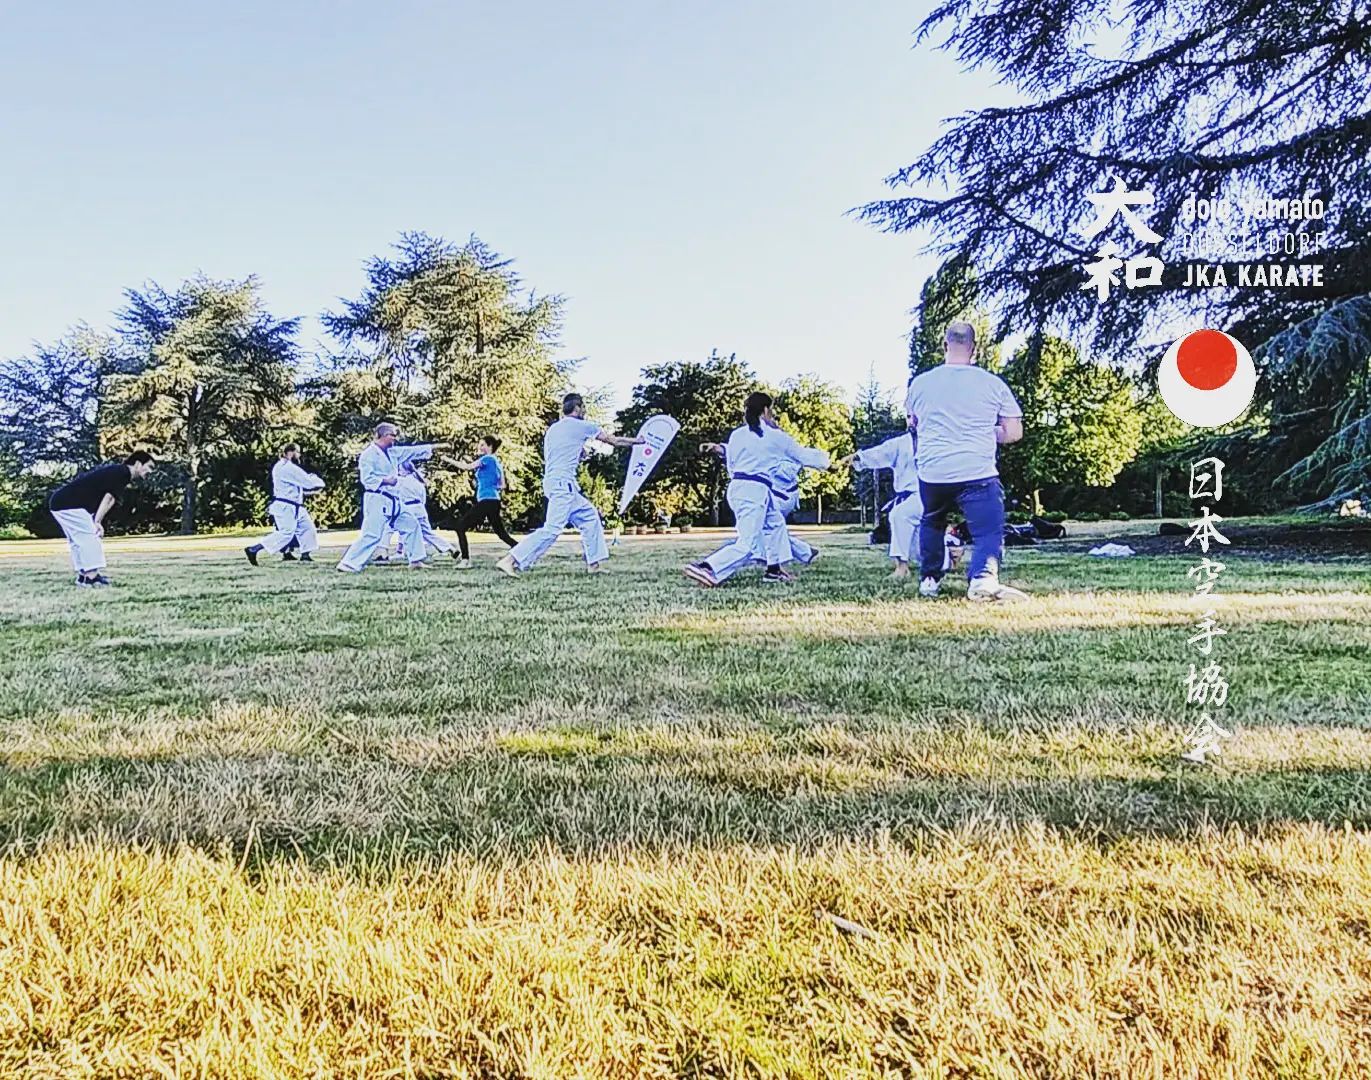 Training im Dojo Yamato Düsseldorf e.V.🥋
Trainer Keigo Shimizu 🇯🇵
.
.
.
.
.
.
.
.
.
#karate #training #fun #jka #djkb #kihon #kata #kumite #düsseldorf #duesseldorf #japan #sport #sportmotivation #shotokan #traditional #nrw #yamatoduesseldorf #fitness #fitnessmotivation #jkaKarate #jkakaratedo #neuss #ratingen #hilden #leverkusen #kaarst #selbstbstbewusstsein #selbstvertrauen